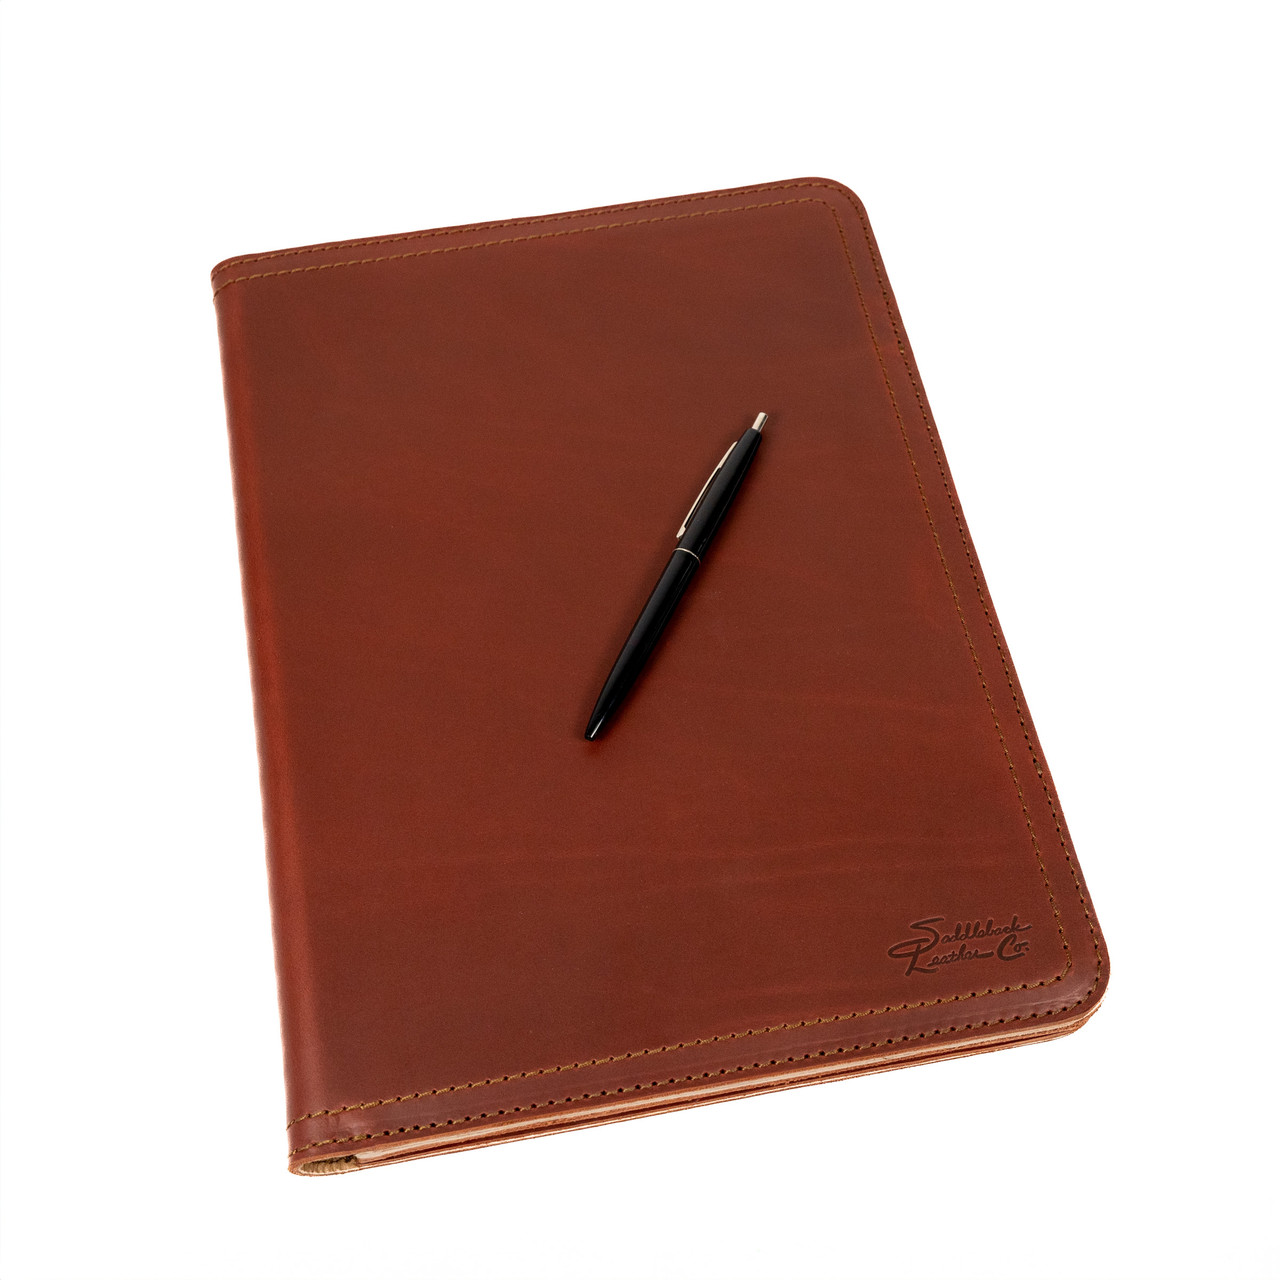 Medium Office Organizer for Pens, Binders, Notebooks / Artist